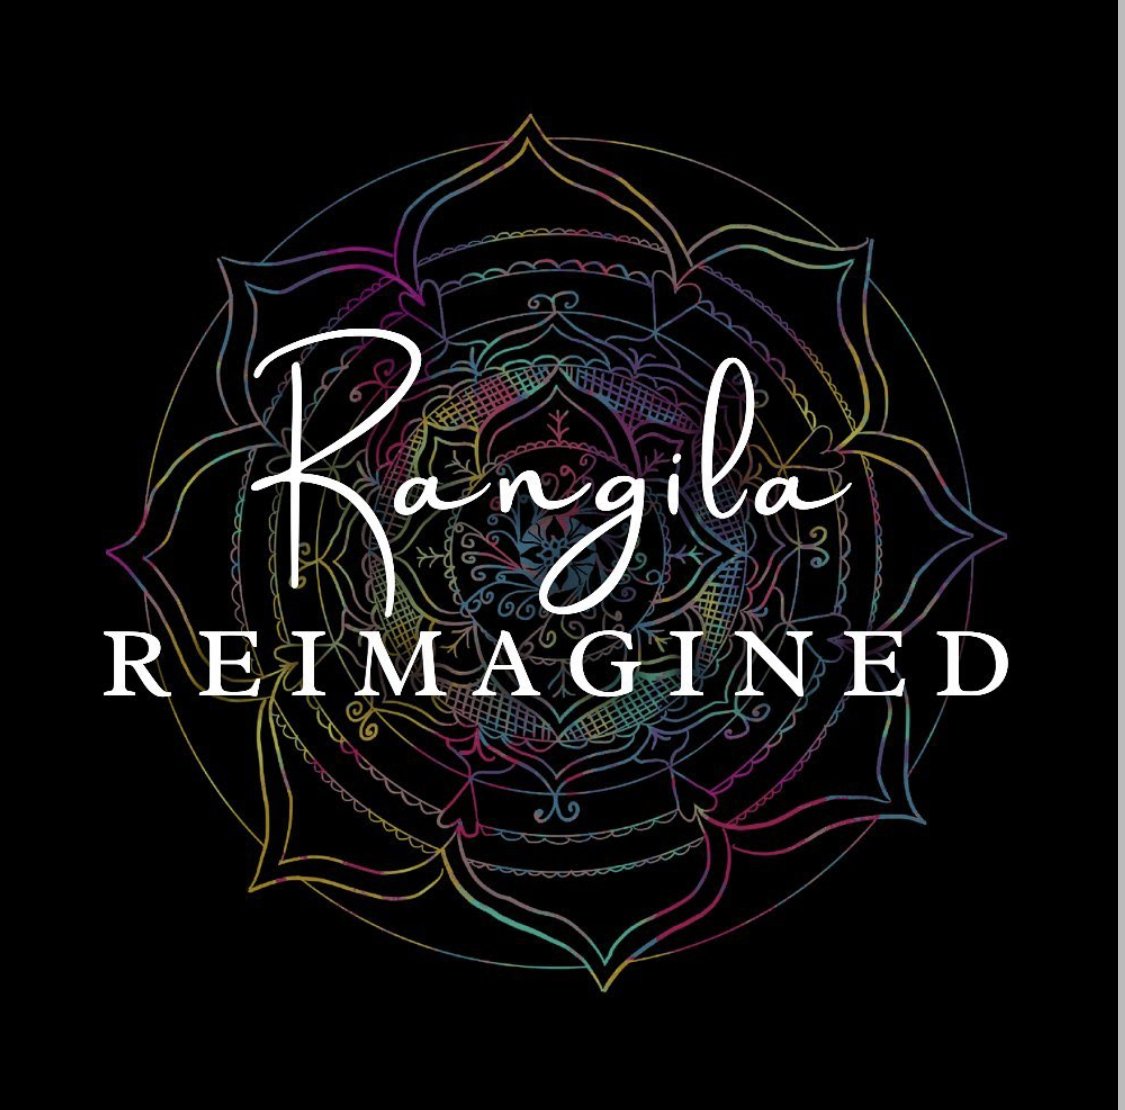 Rangila Reimagined logo.png